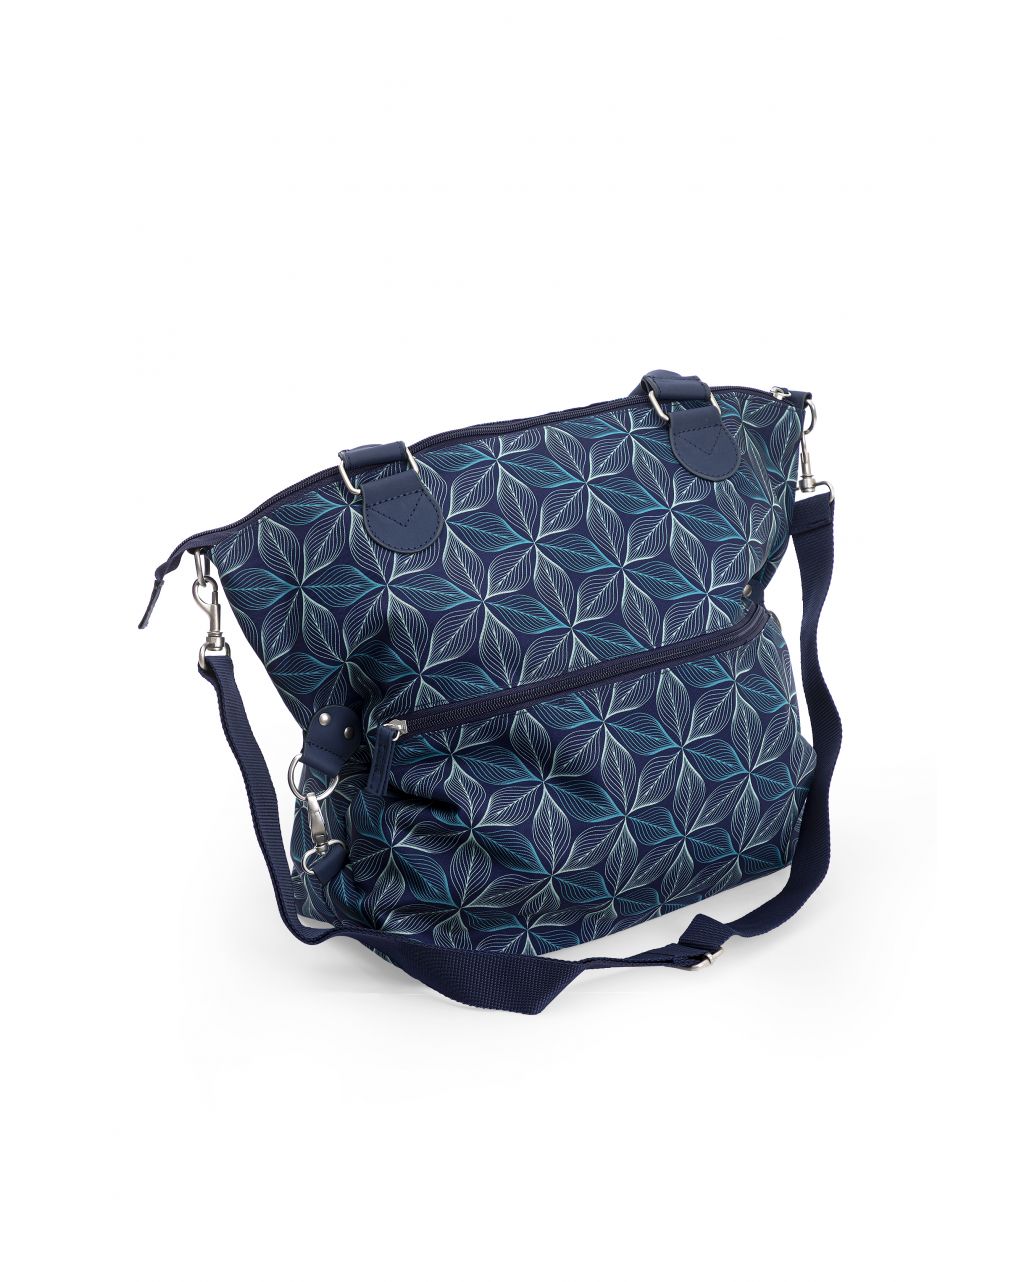 Smart bag blue - Giordani